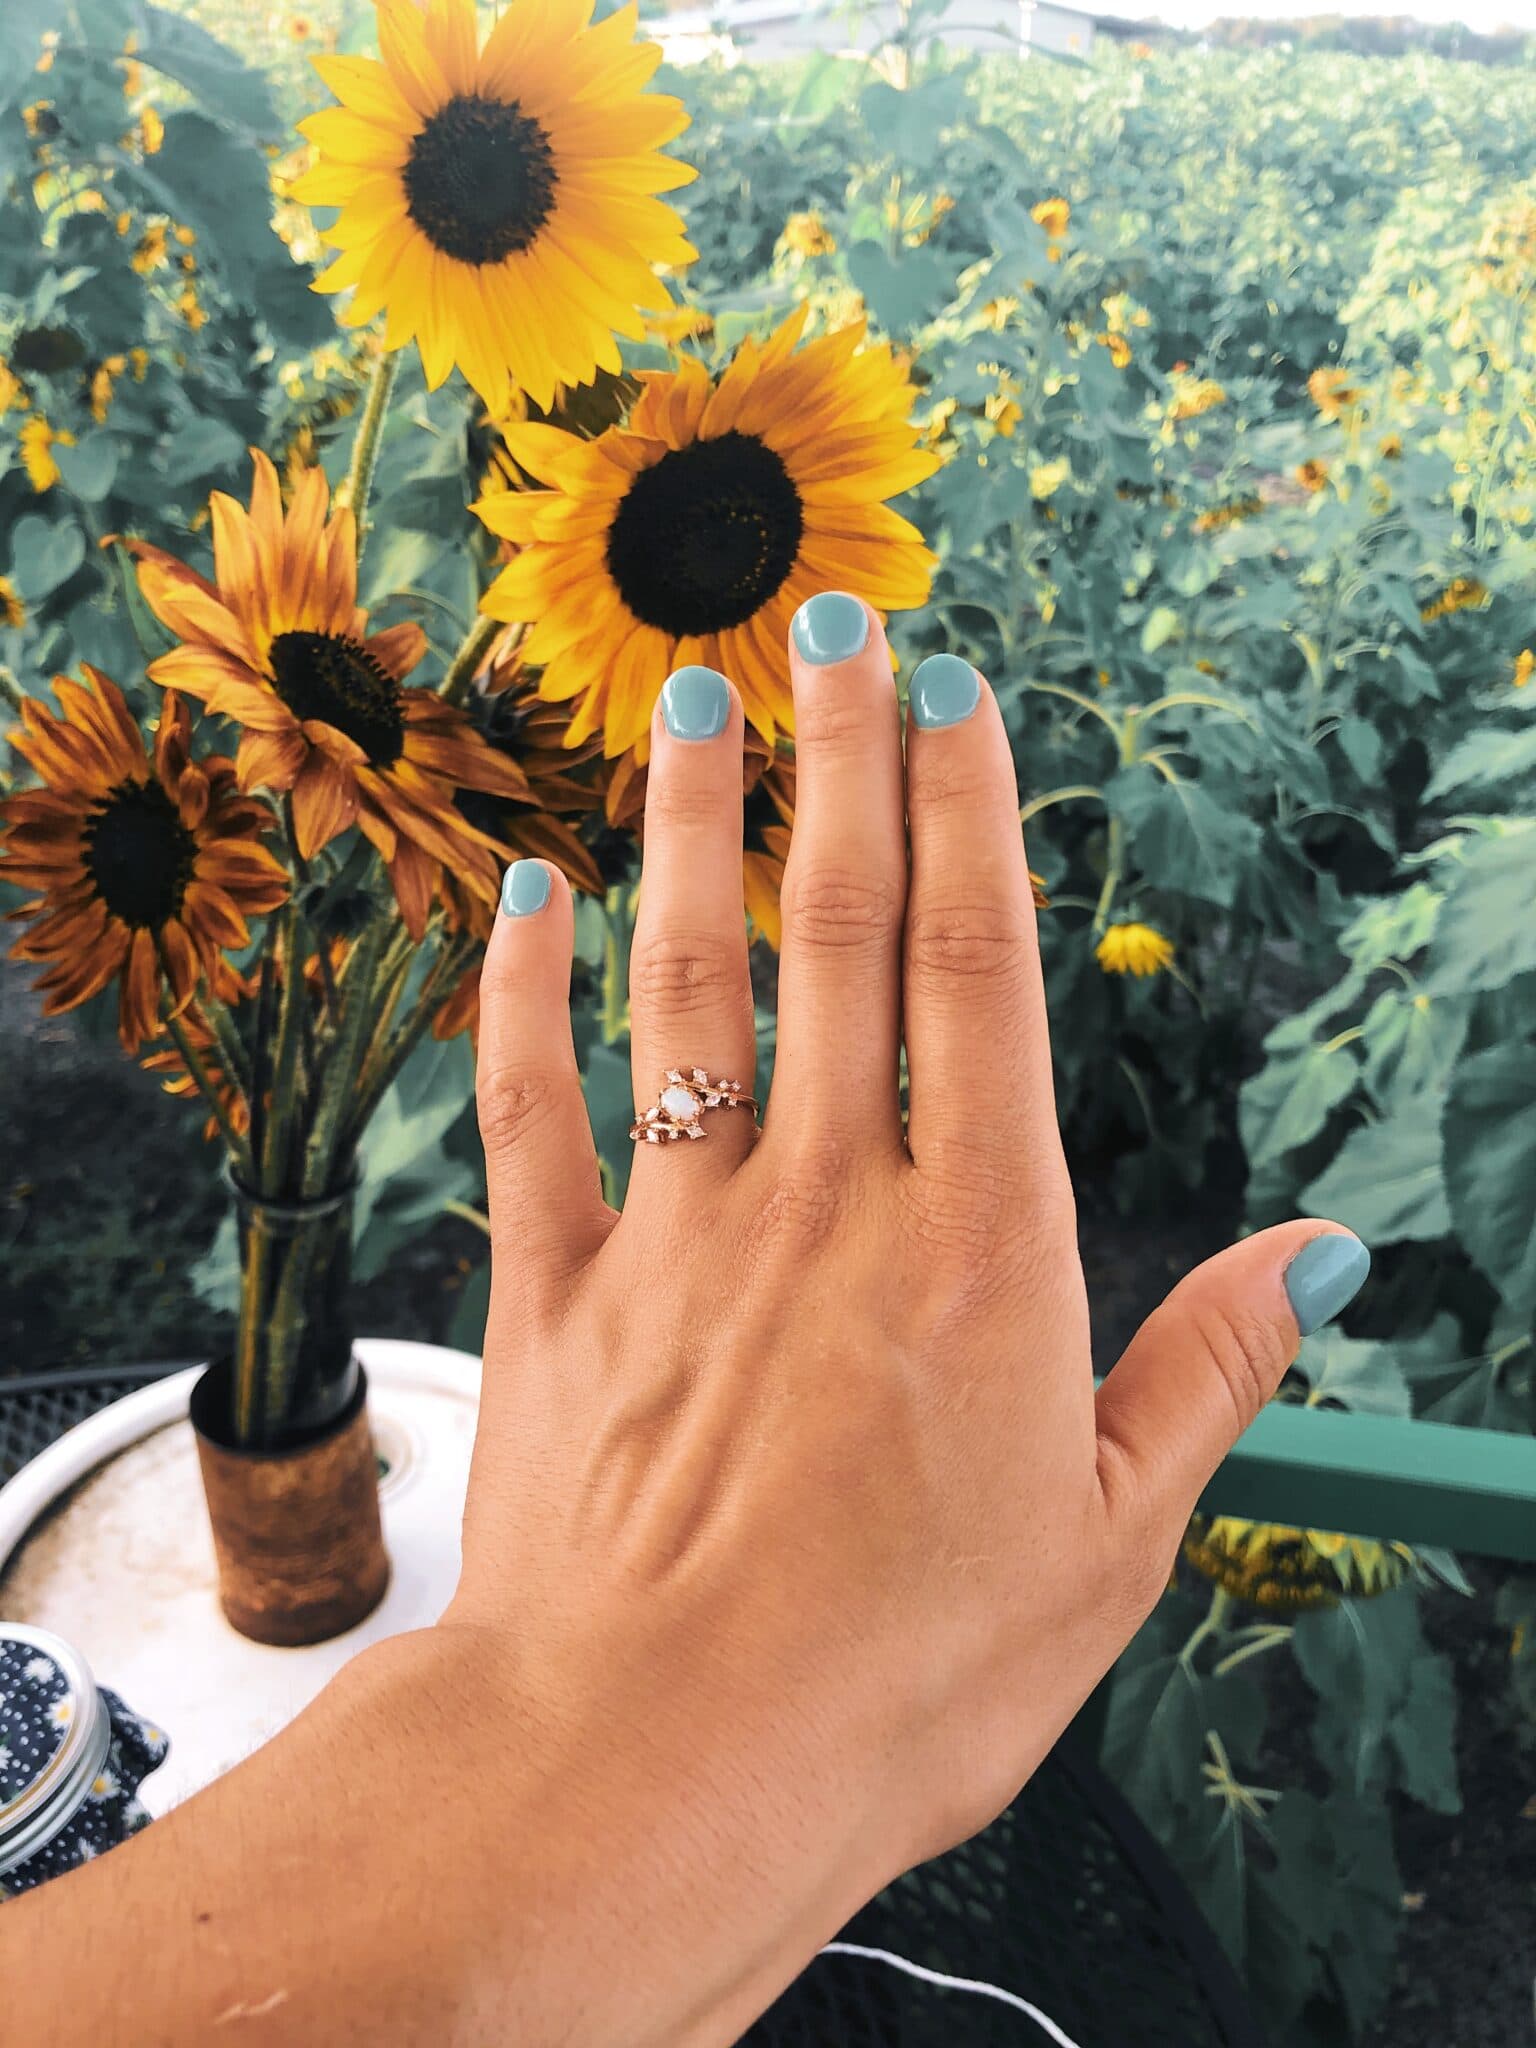 Orlando Florida Sunflower Field Marriage Proposal - 19